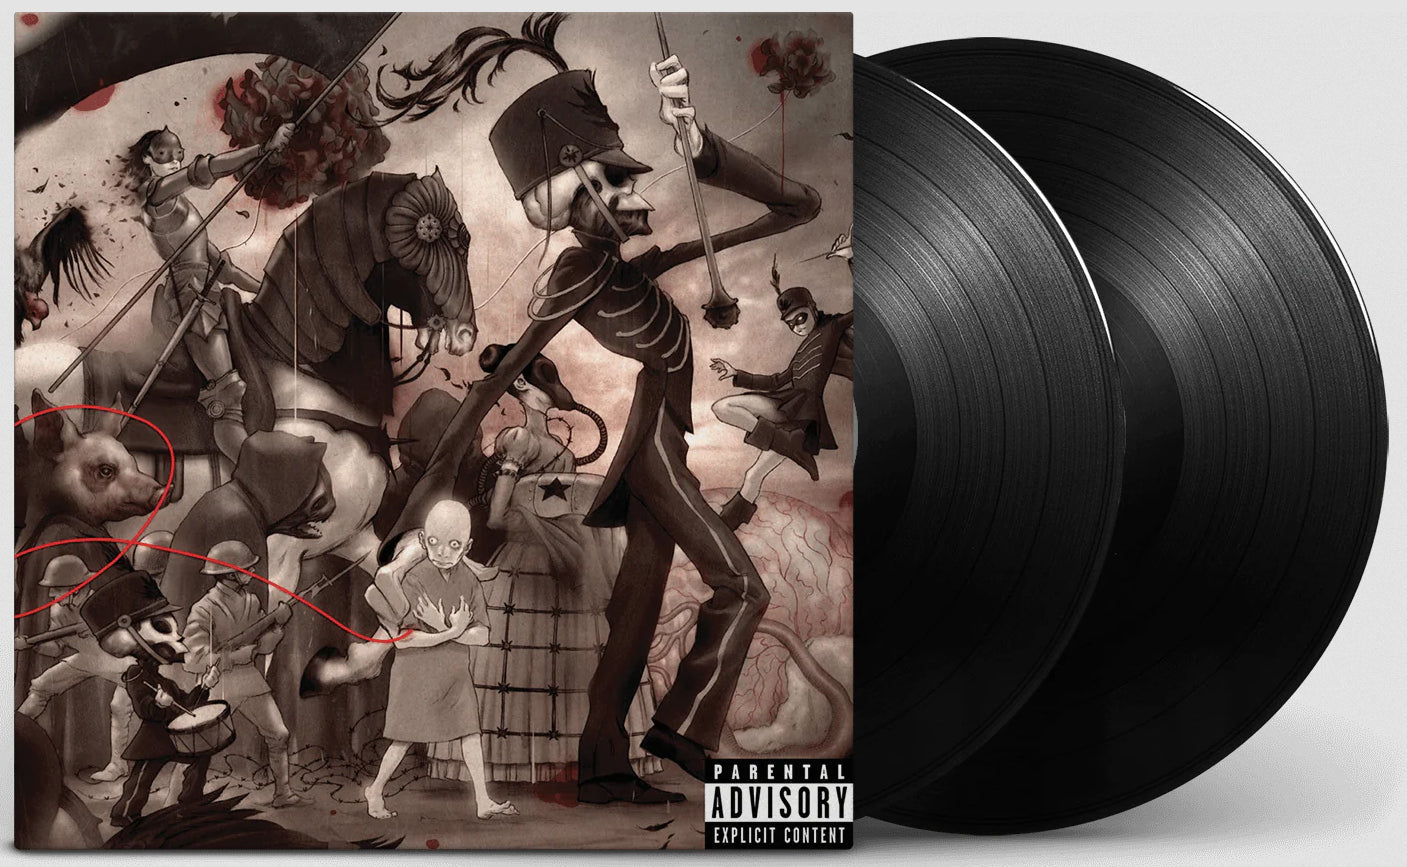 My Chemical Romance The Black Parade Vinyl LP